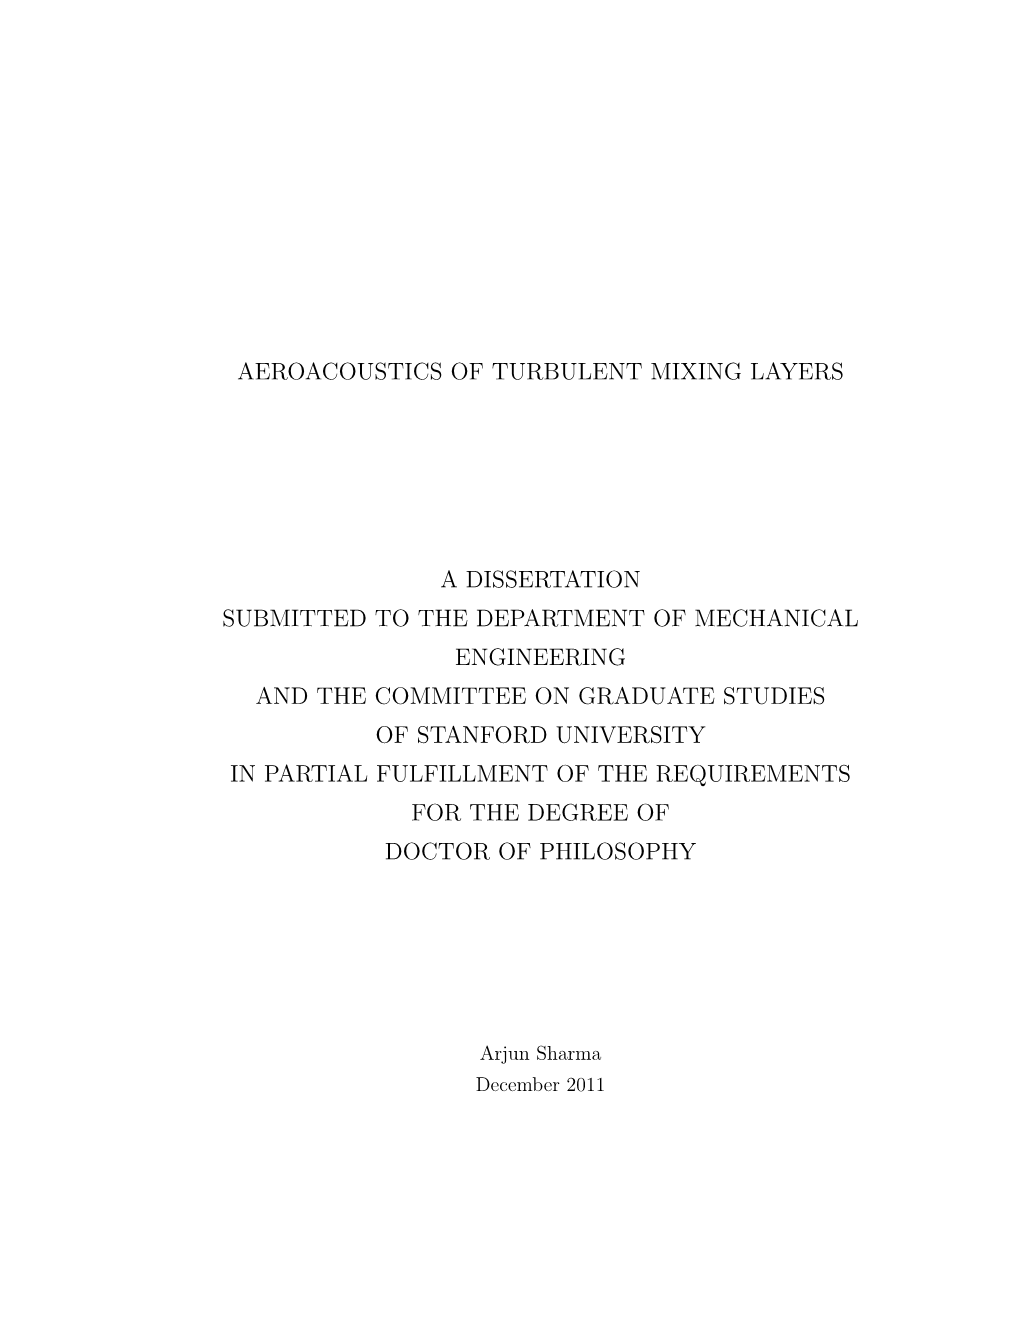 Aeroacoustics of Turbulent Mixing Layers a Dissertation